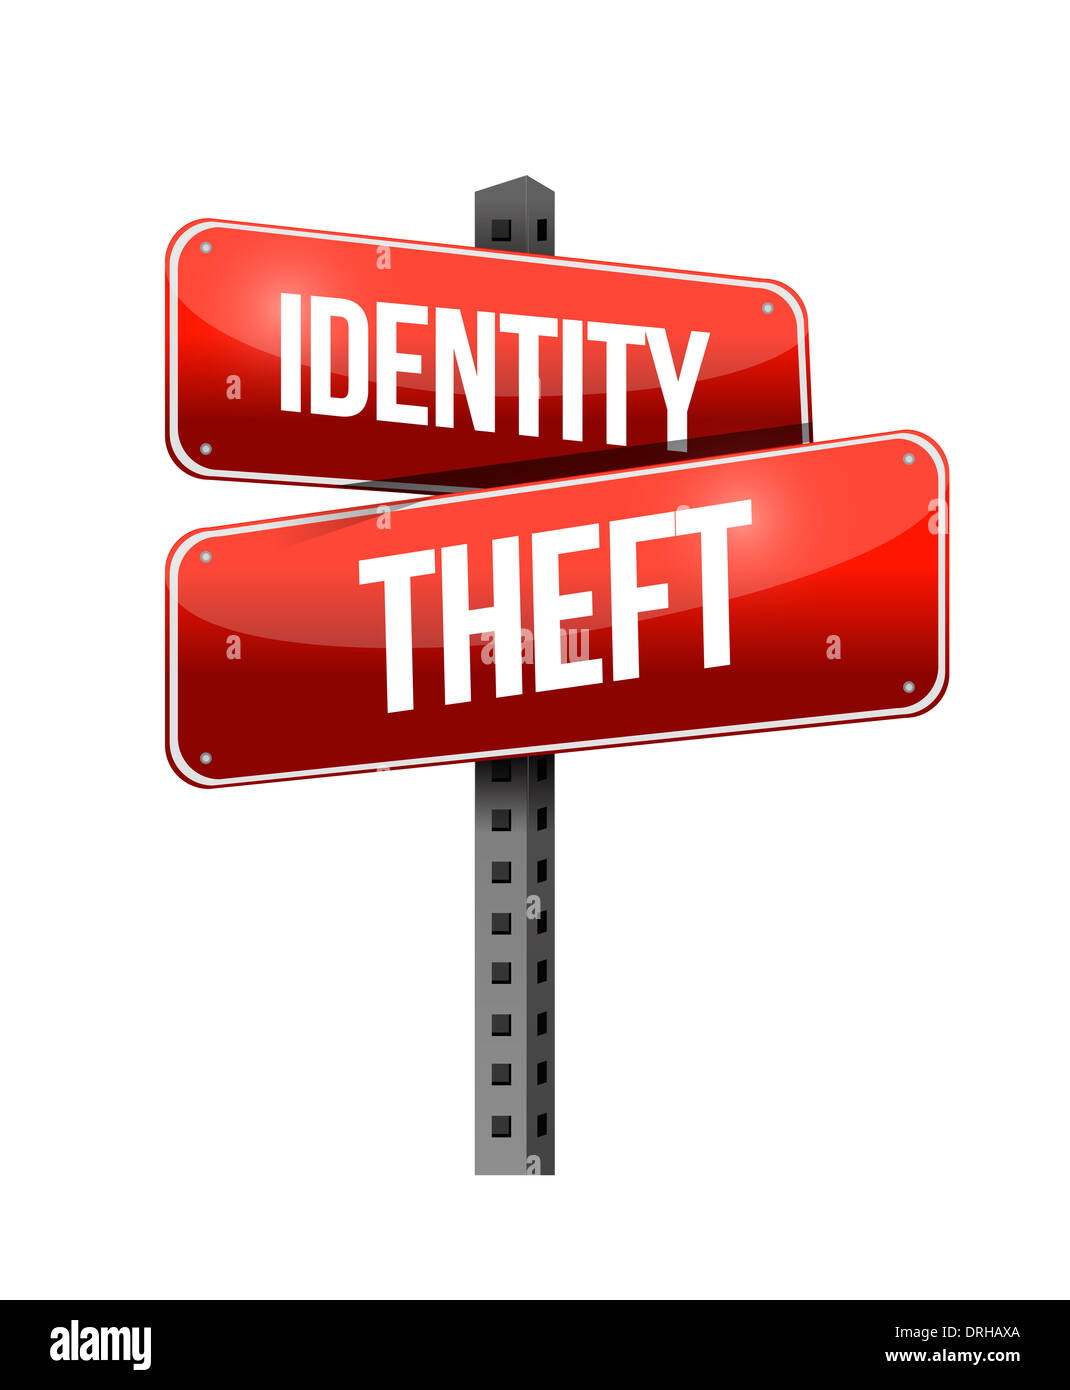 identity theft illustration design over a white background Stock Photo